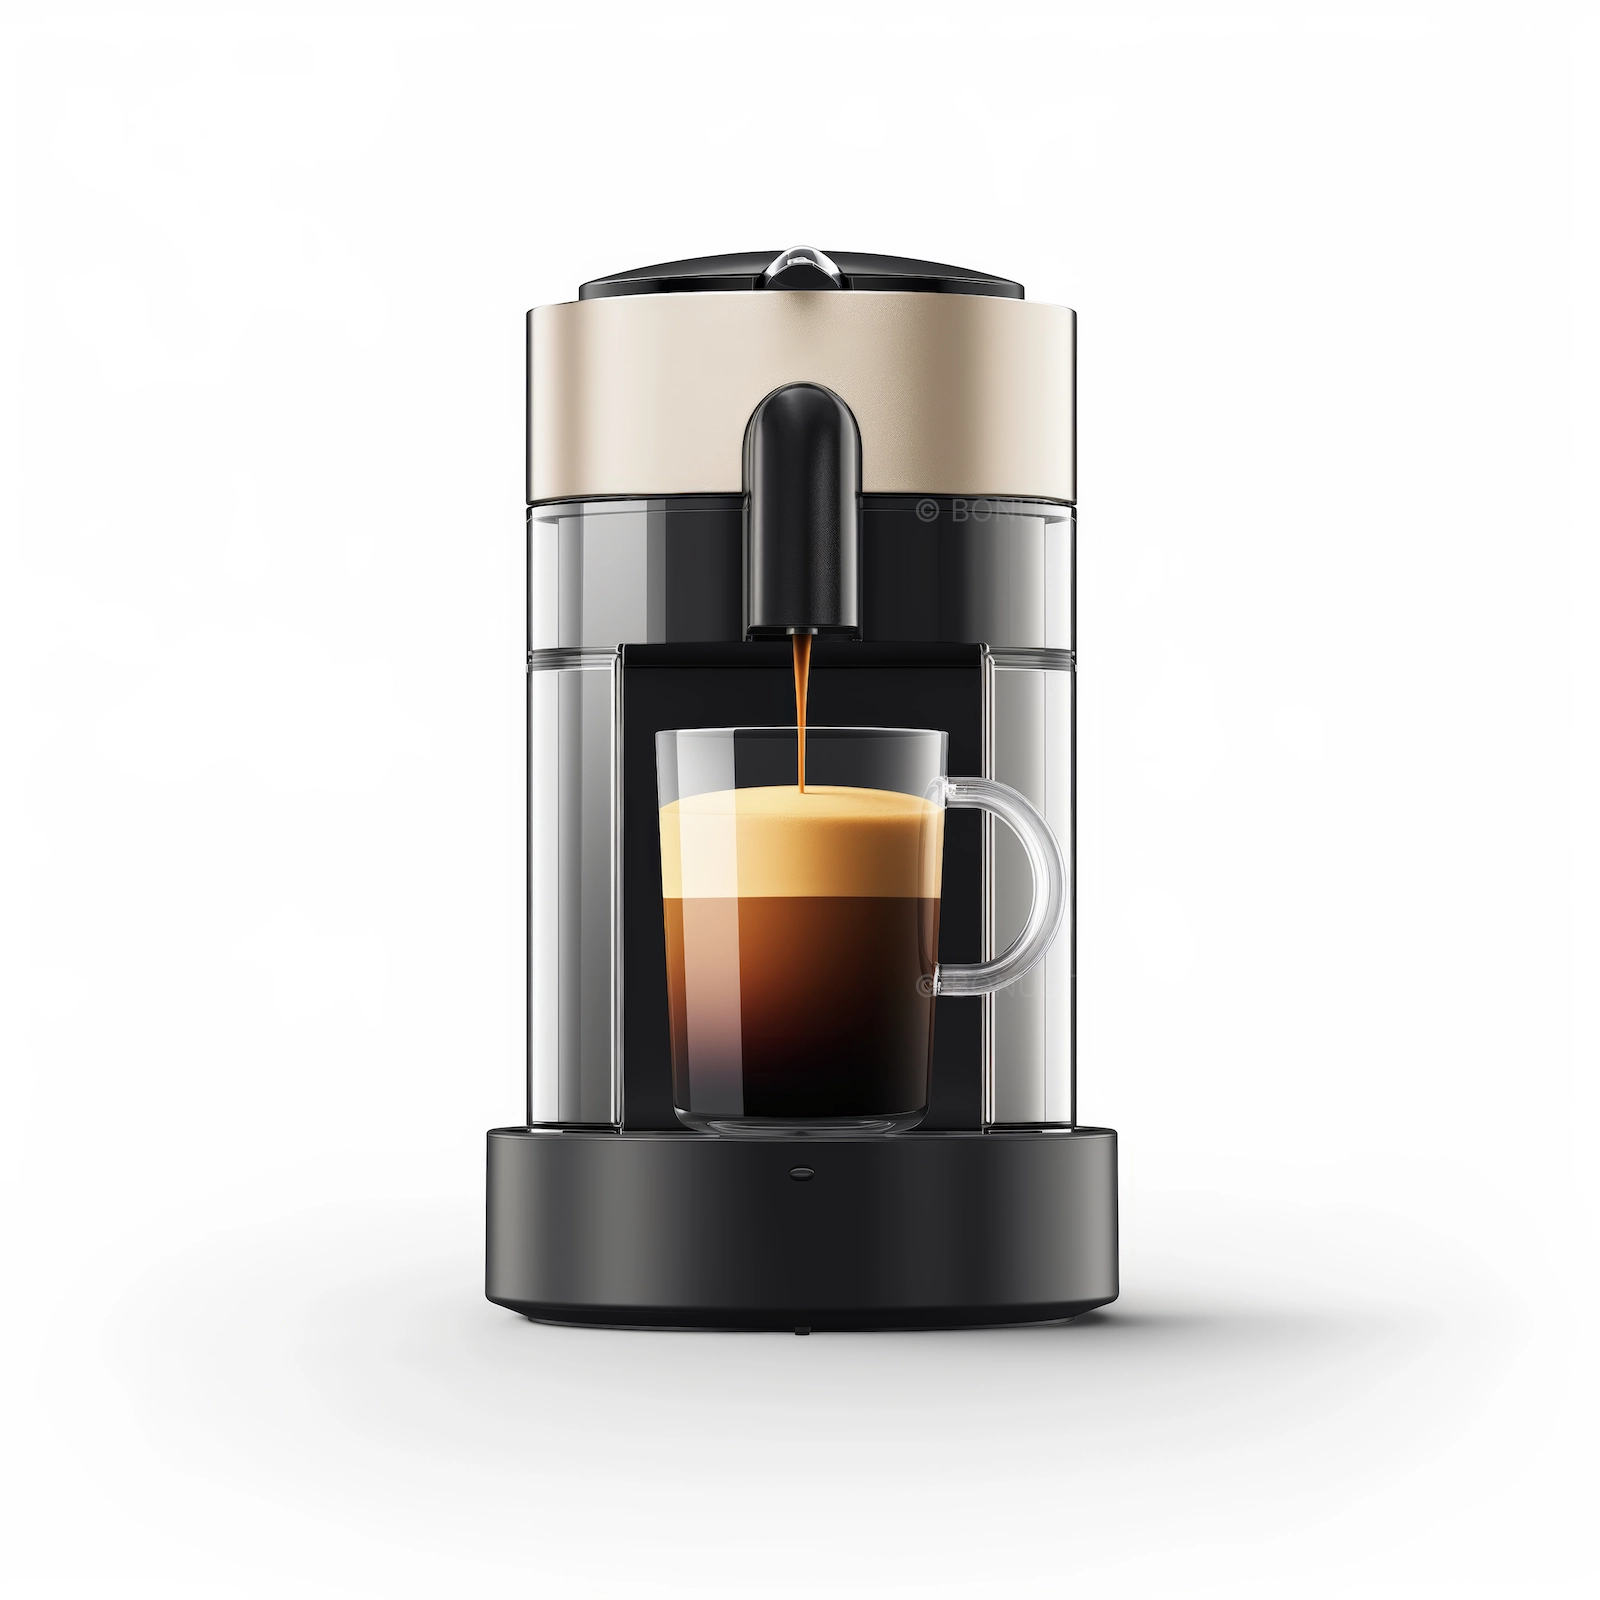 Coffee aromas, machine magic brewing